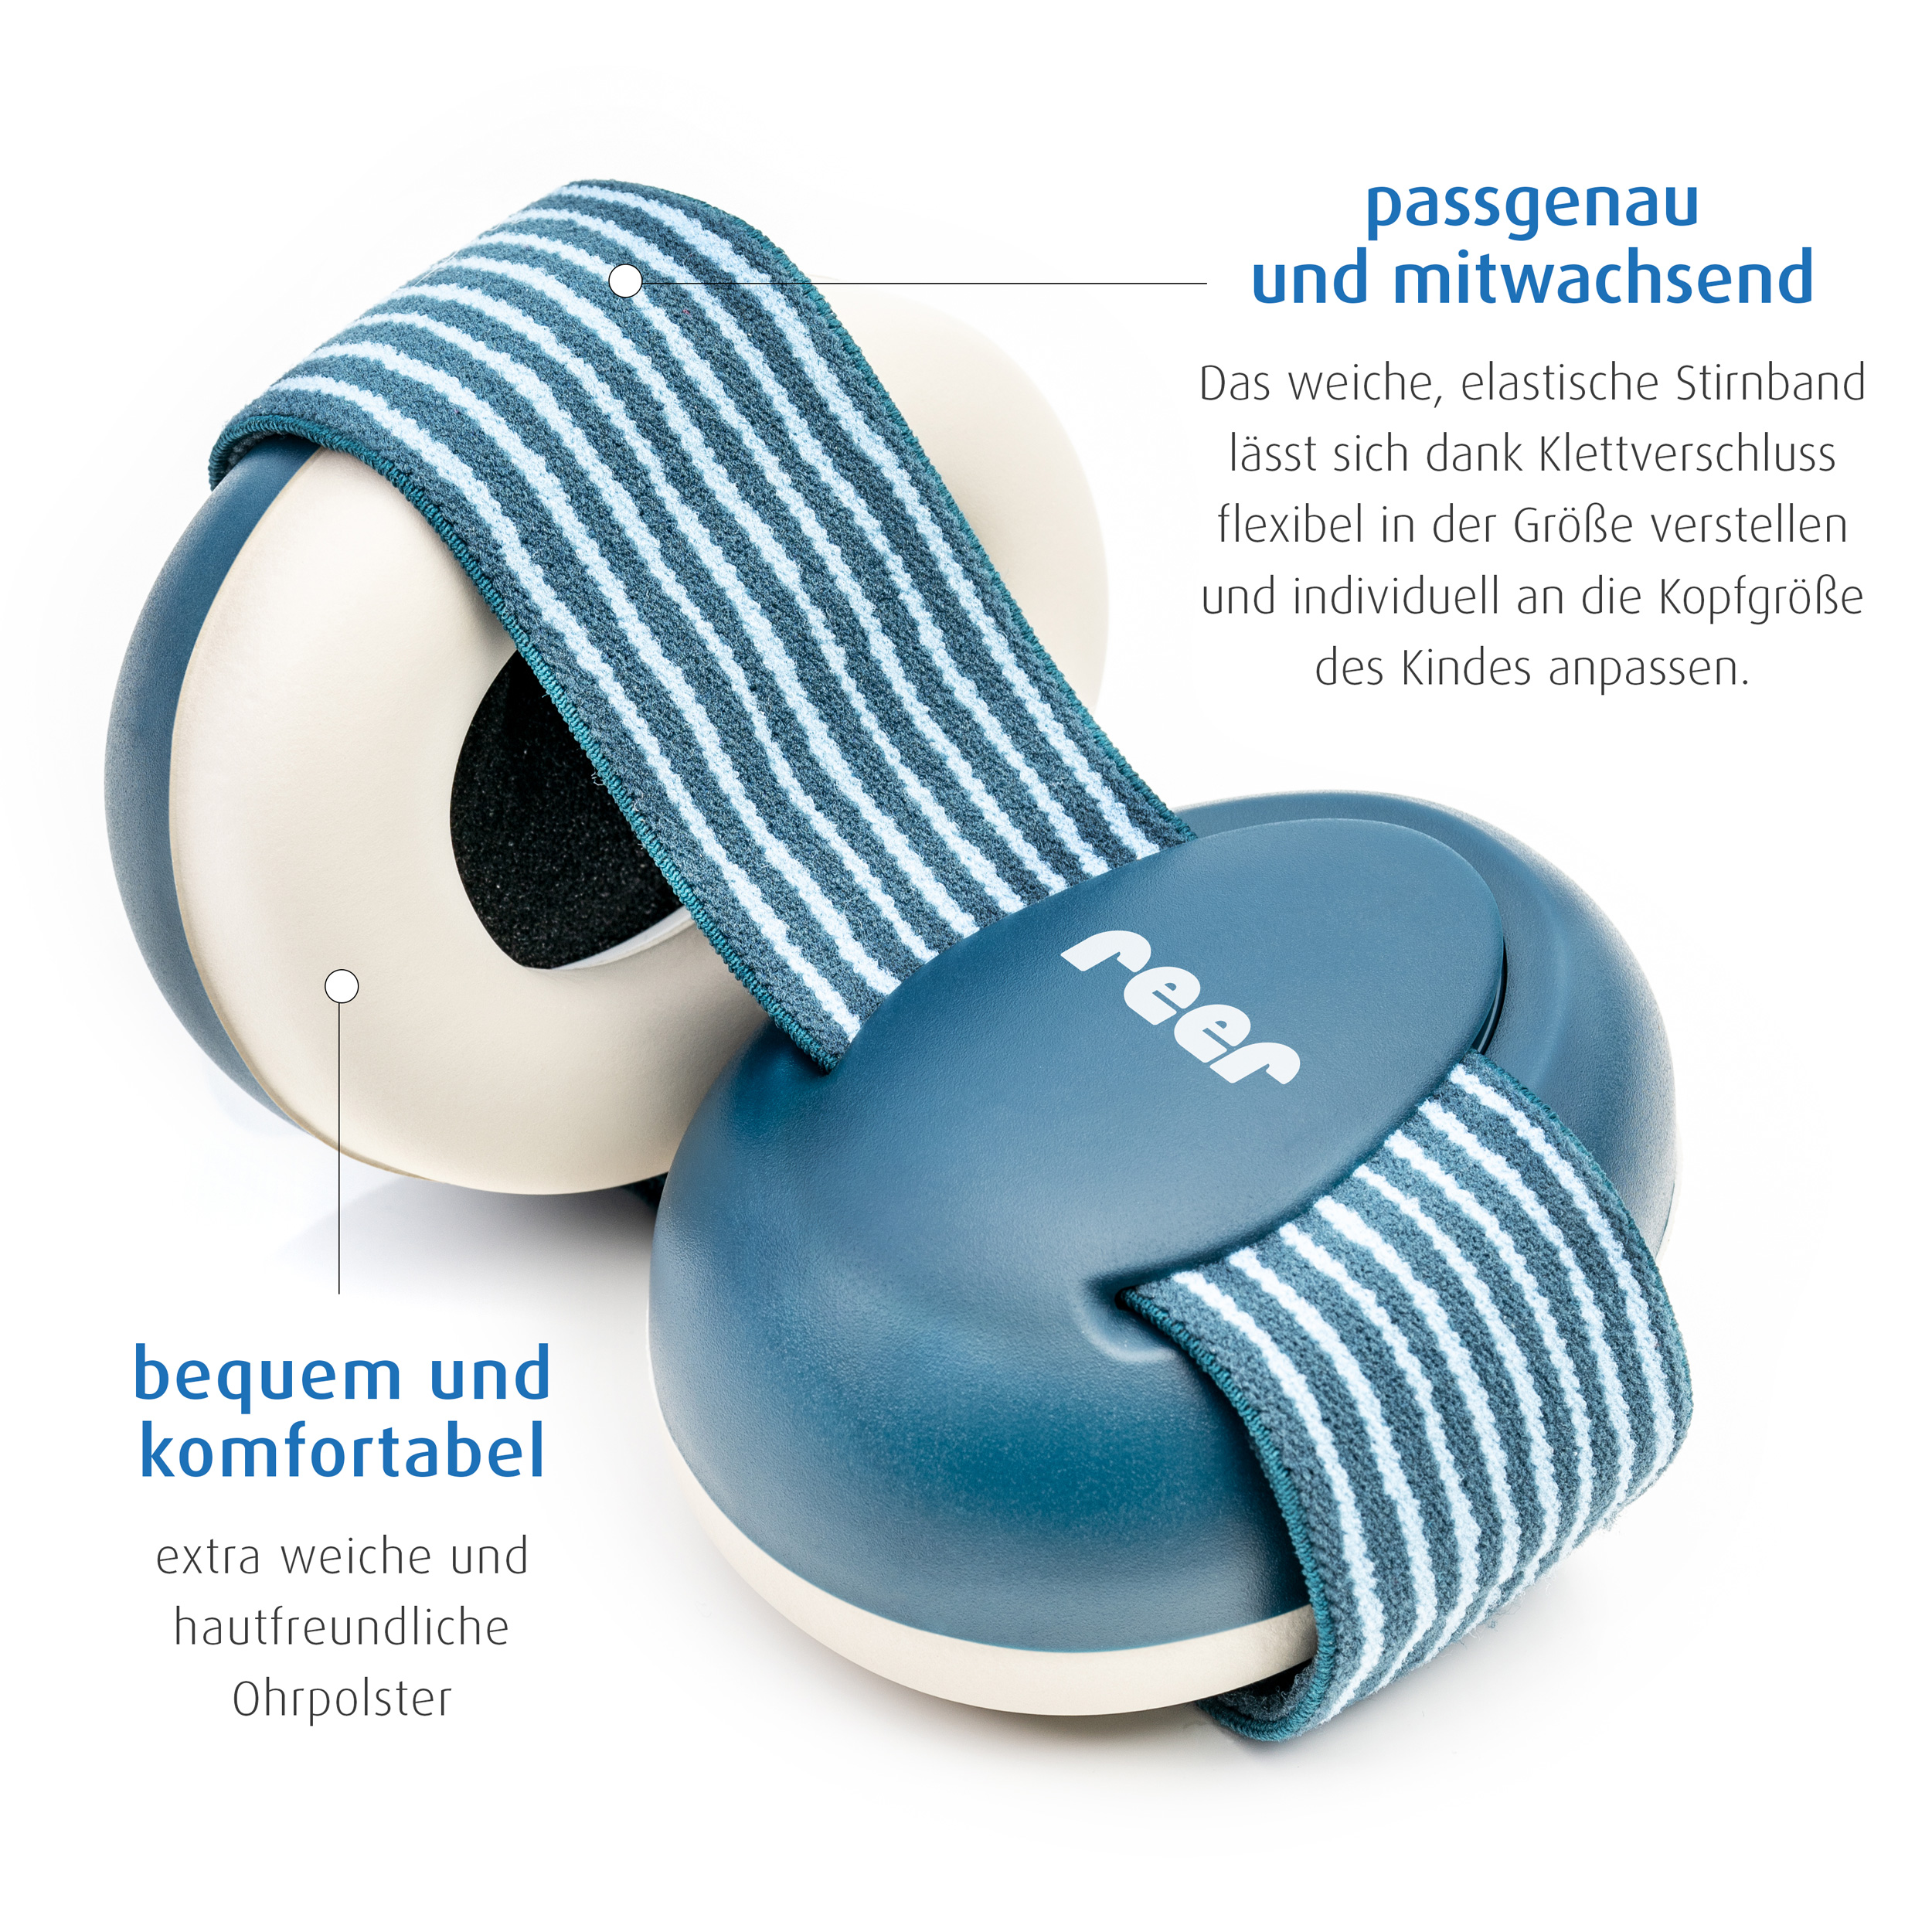 SilentGuard Baby capsule ear protectors, blue